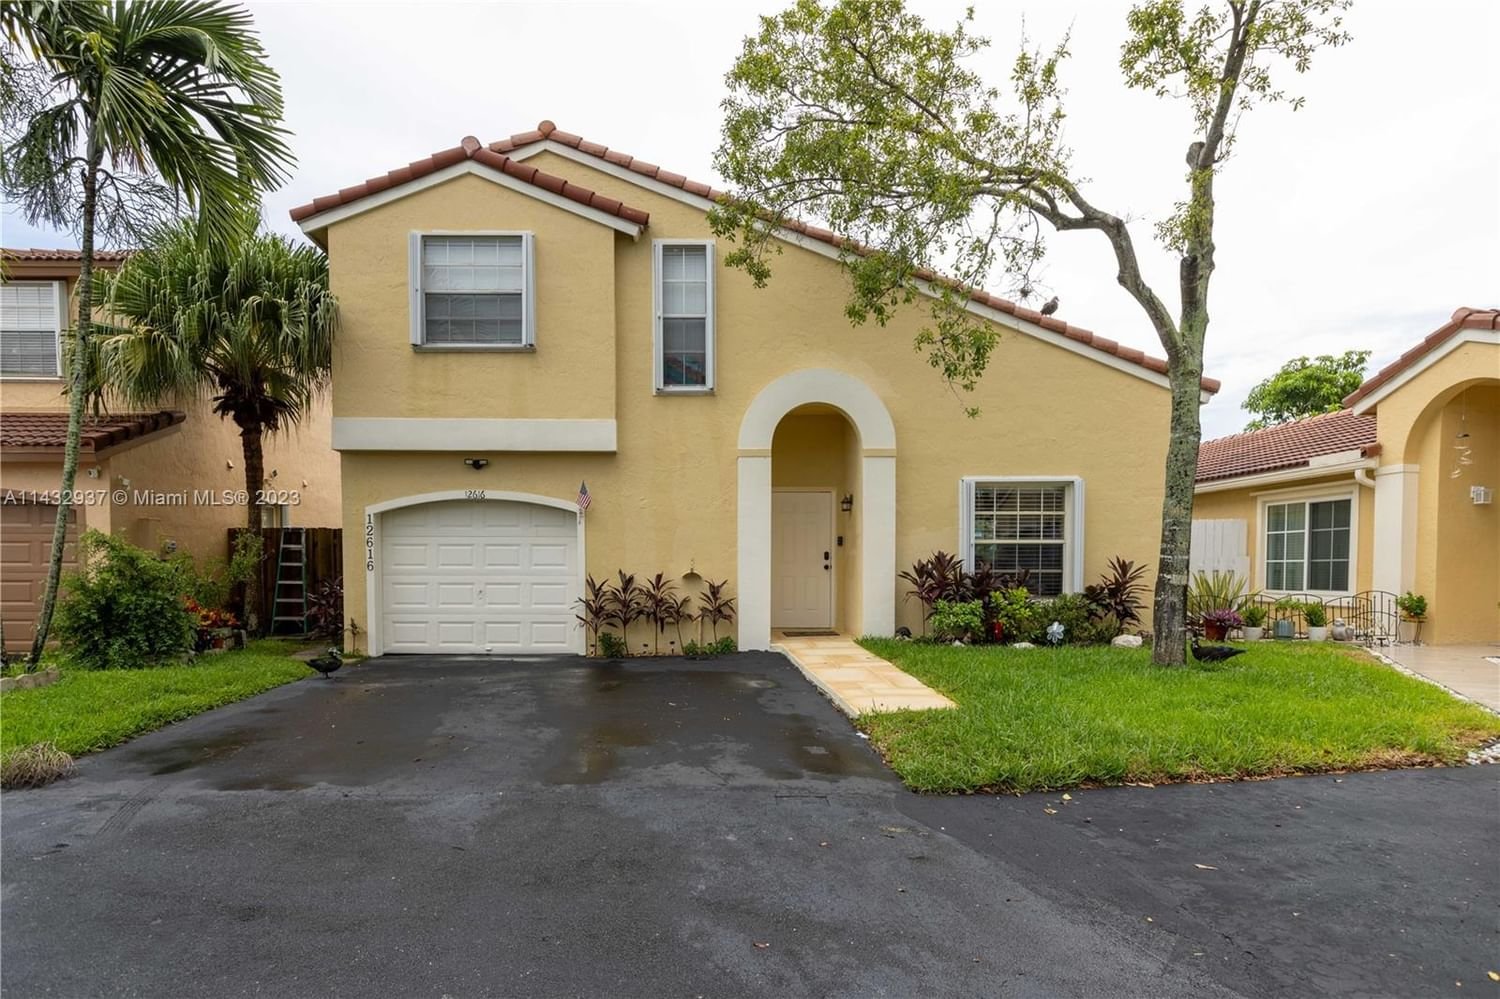 Real estate property located at 12616 13th St, Broward County, SAVANNAH PLAT 1, Sunrise, FL